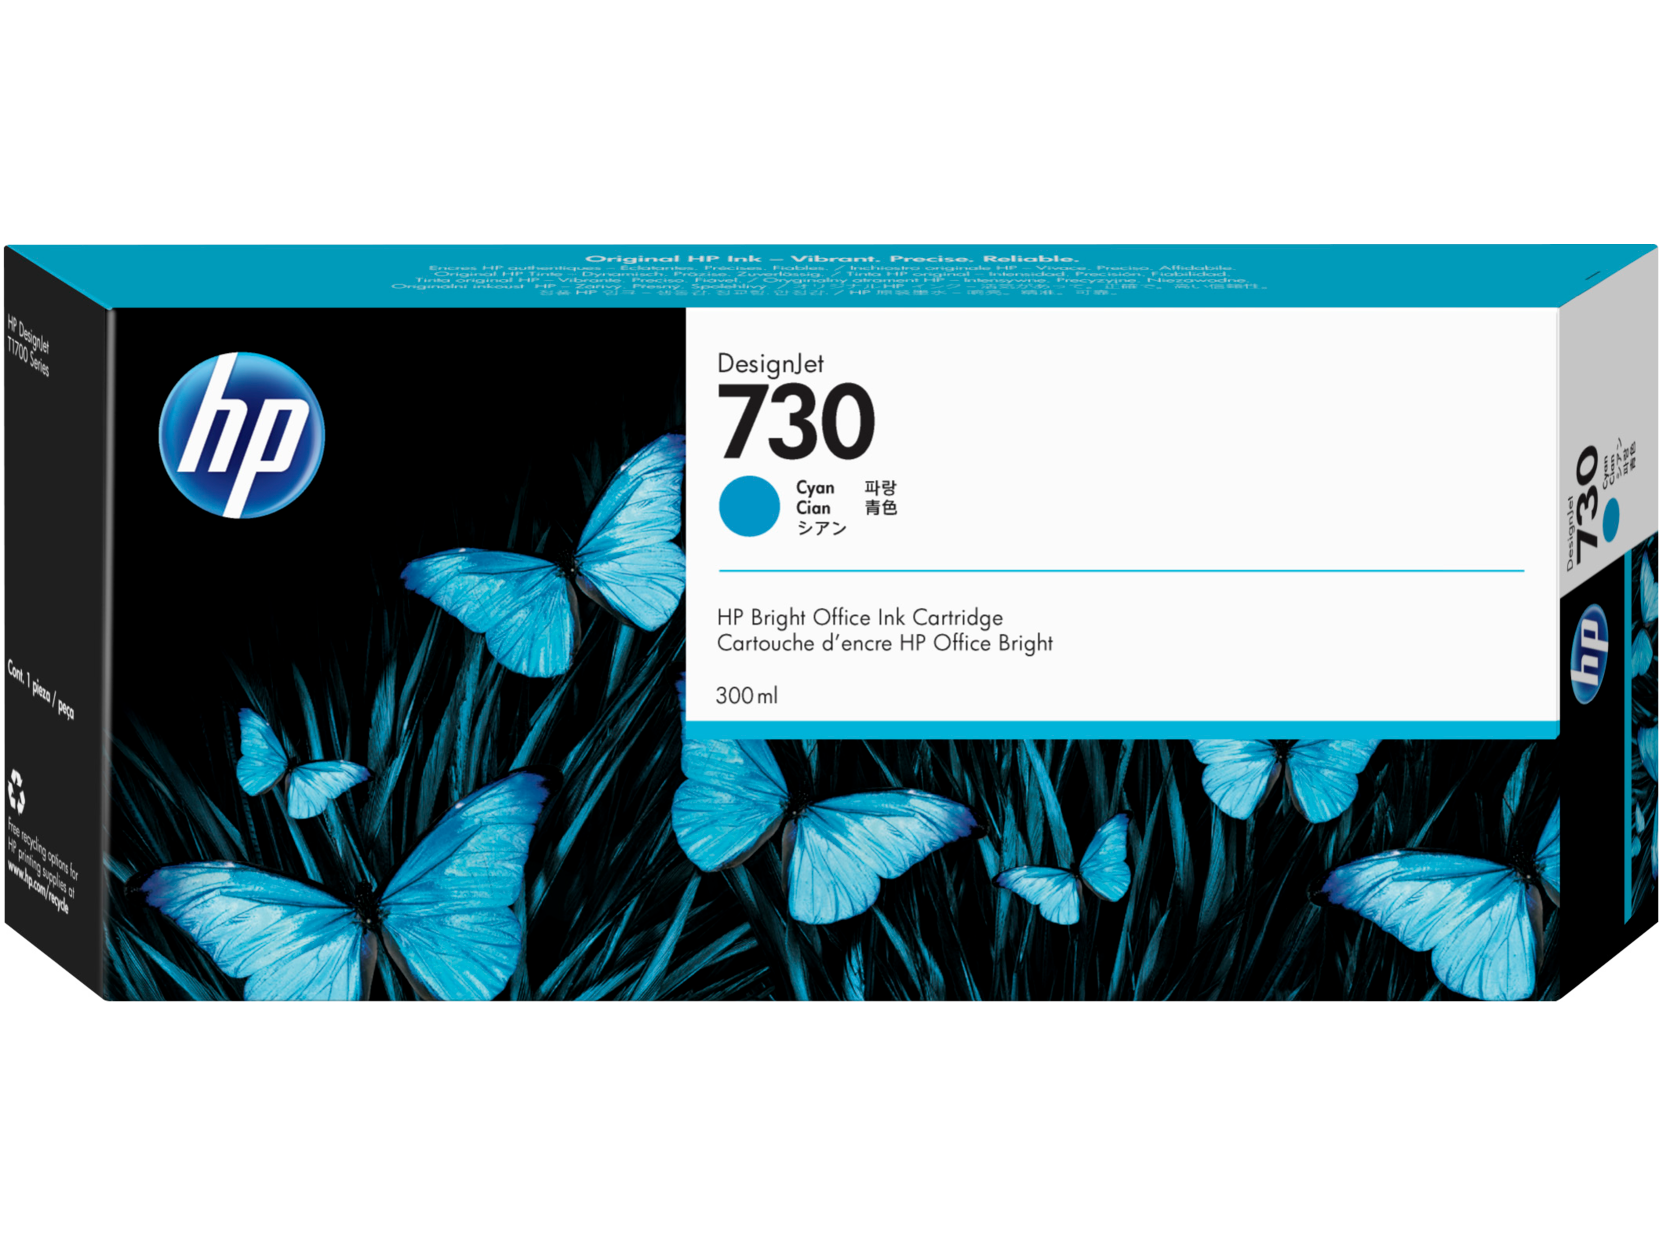 Картридж для печати HP Картридж HP 730 P2V68A вид печати струйный, цвет Голубой, емкость 300мл.